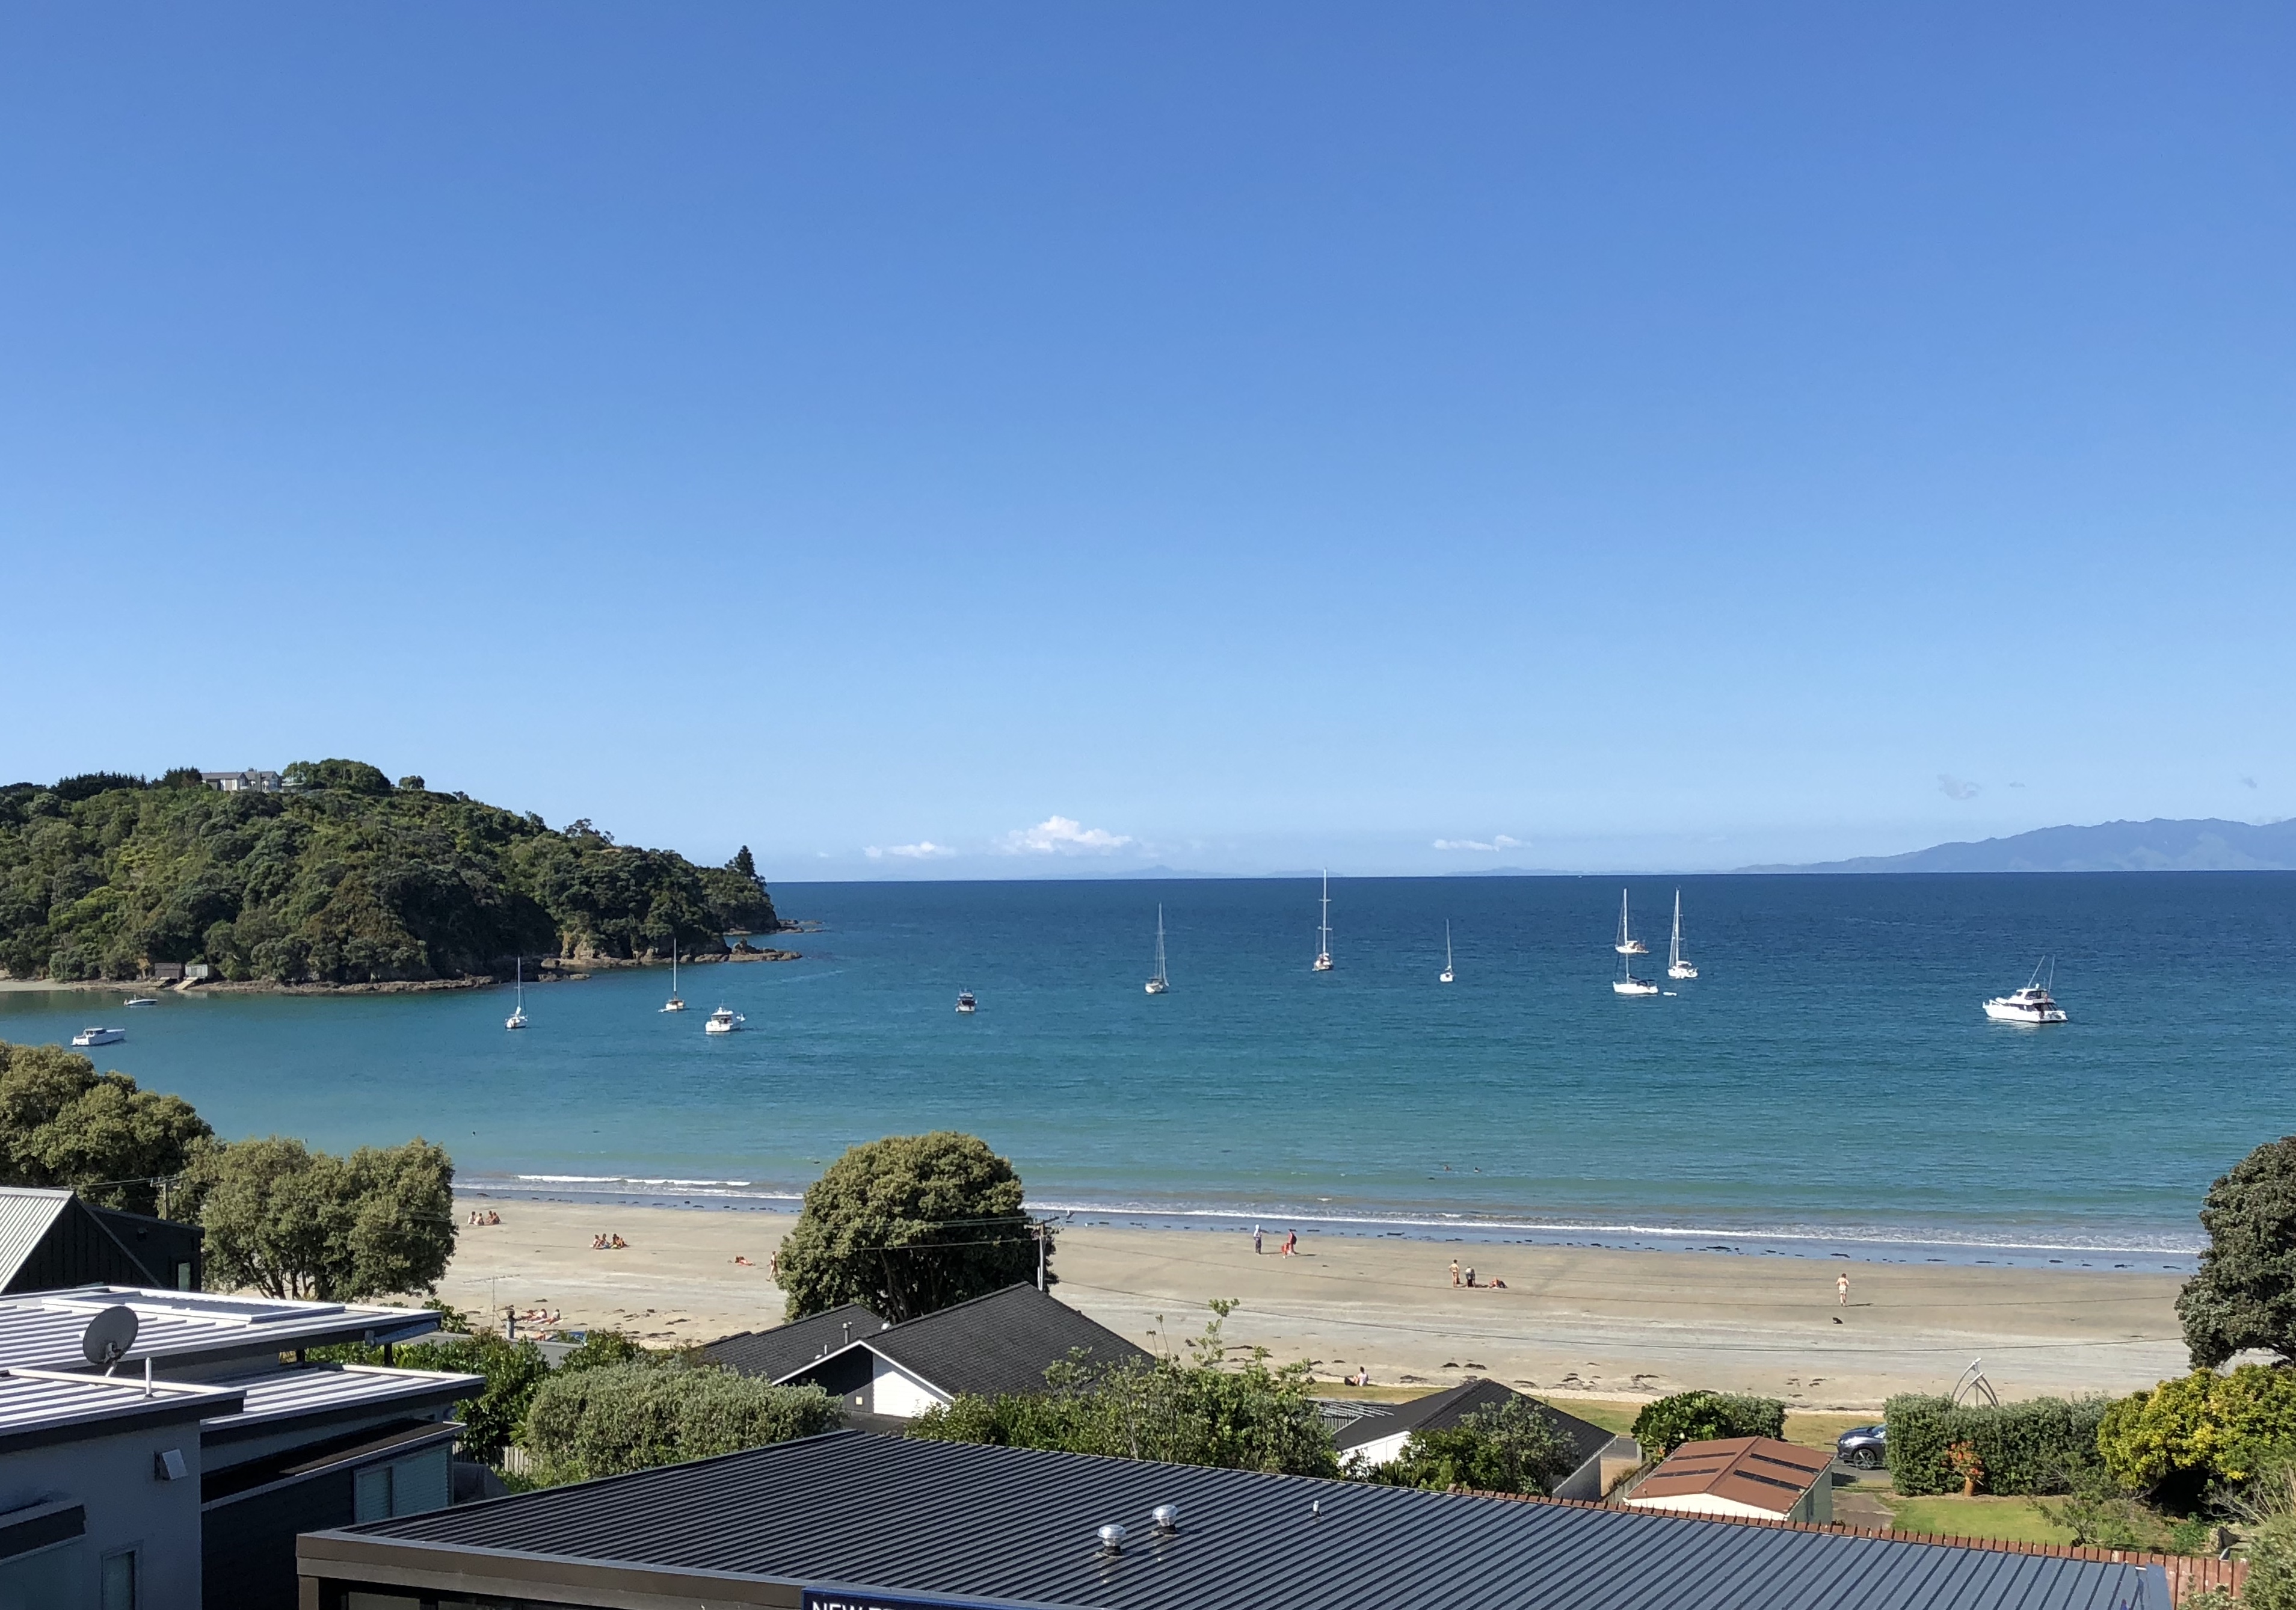 New Zealand is Stunning!